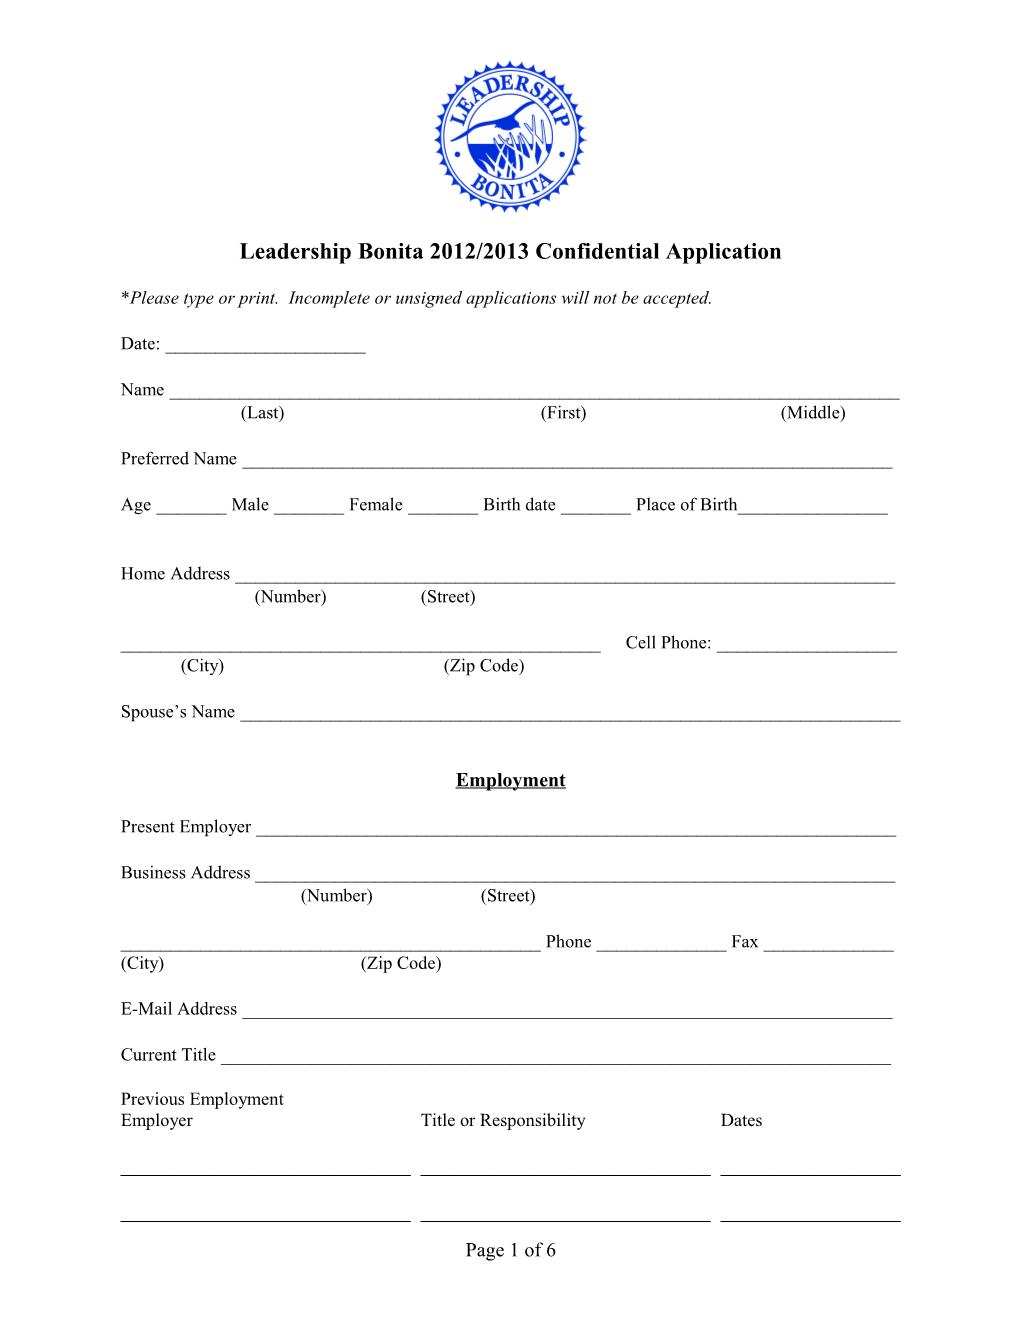 Leadership Bonita 2012/2013 Confidential Application